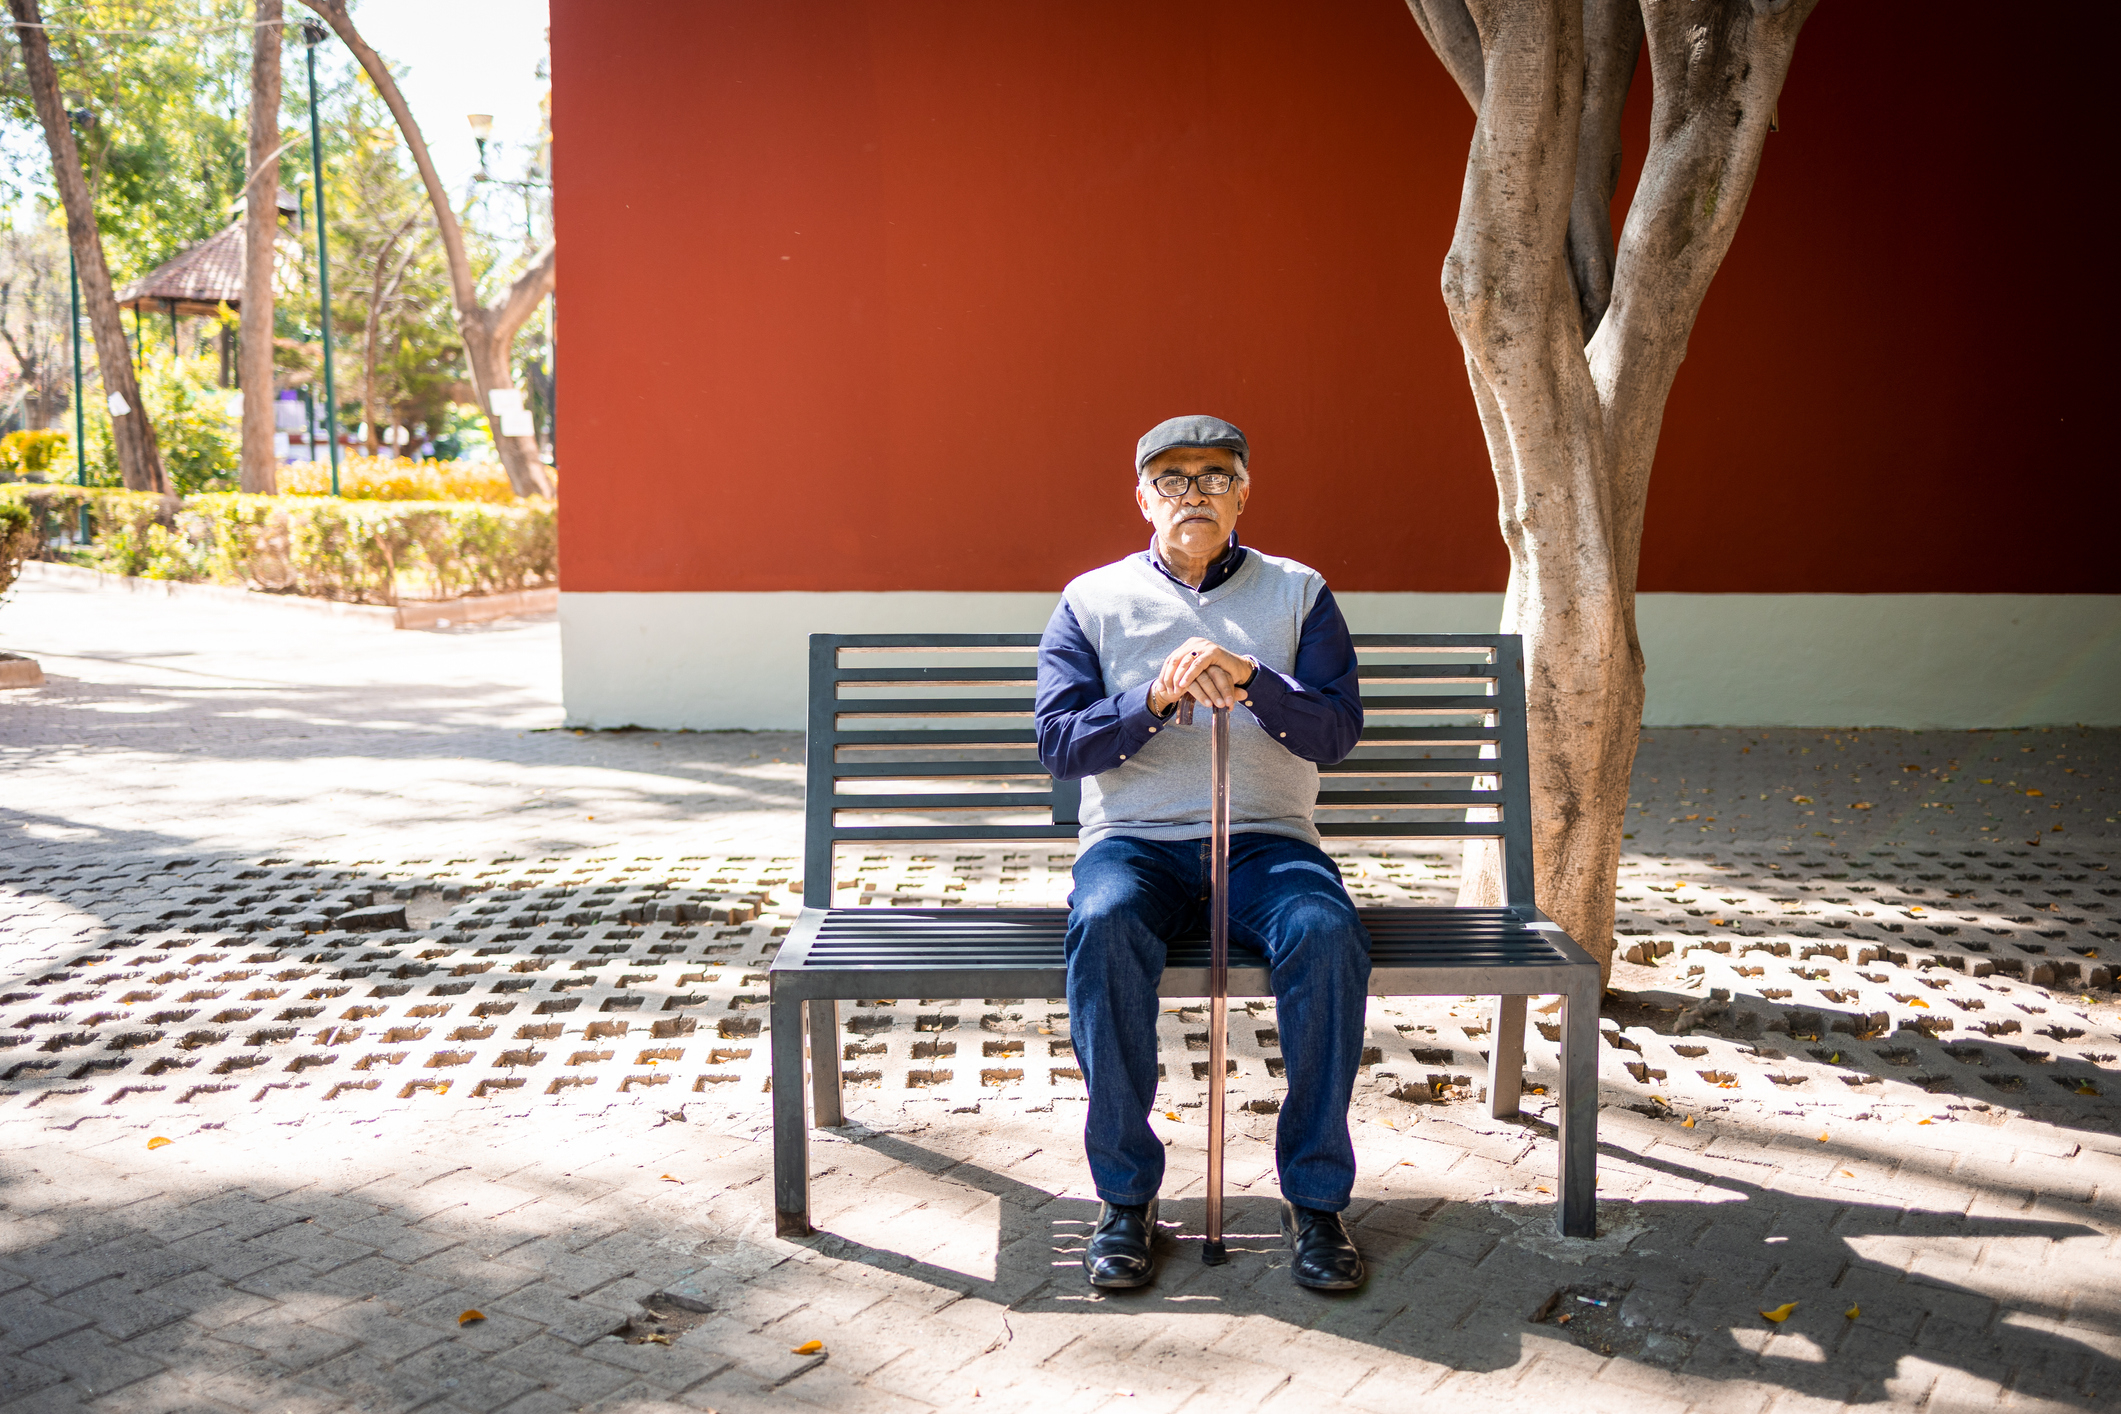 older man sitting on a bench